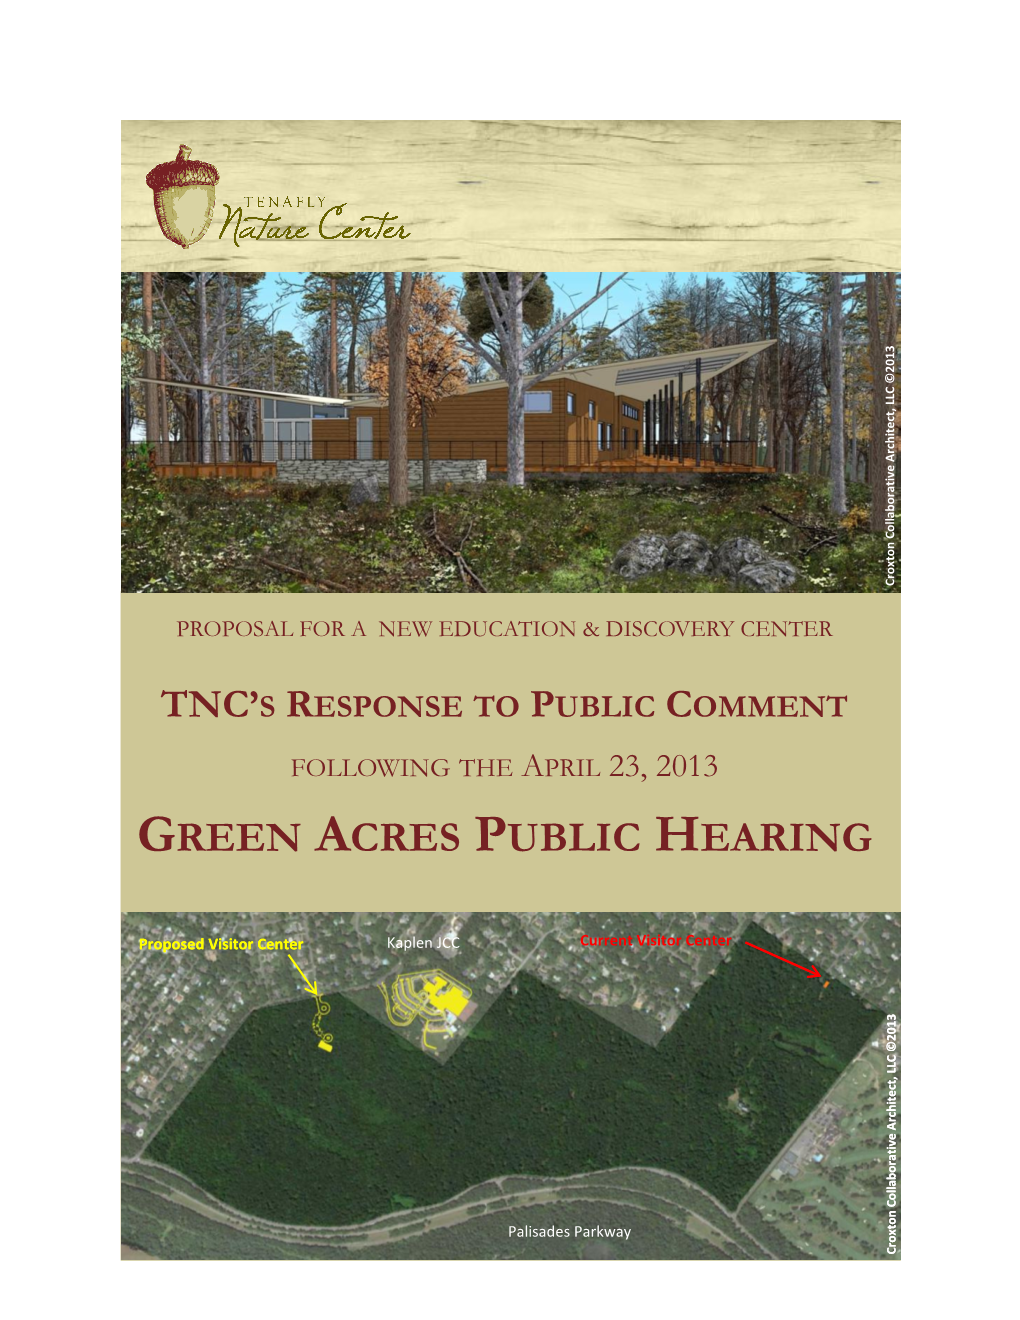 Green Acres Public Hearing